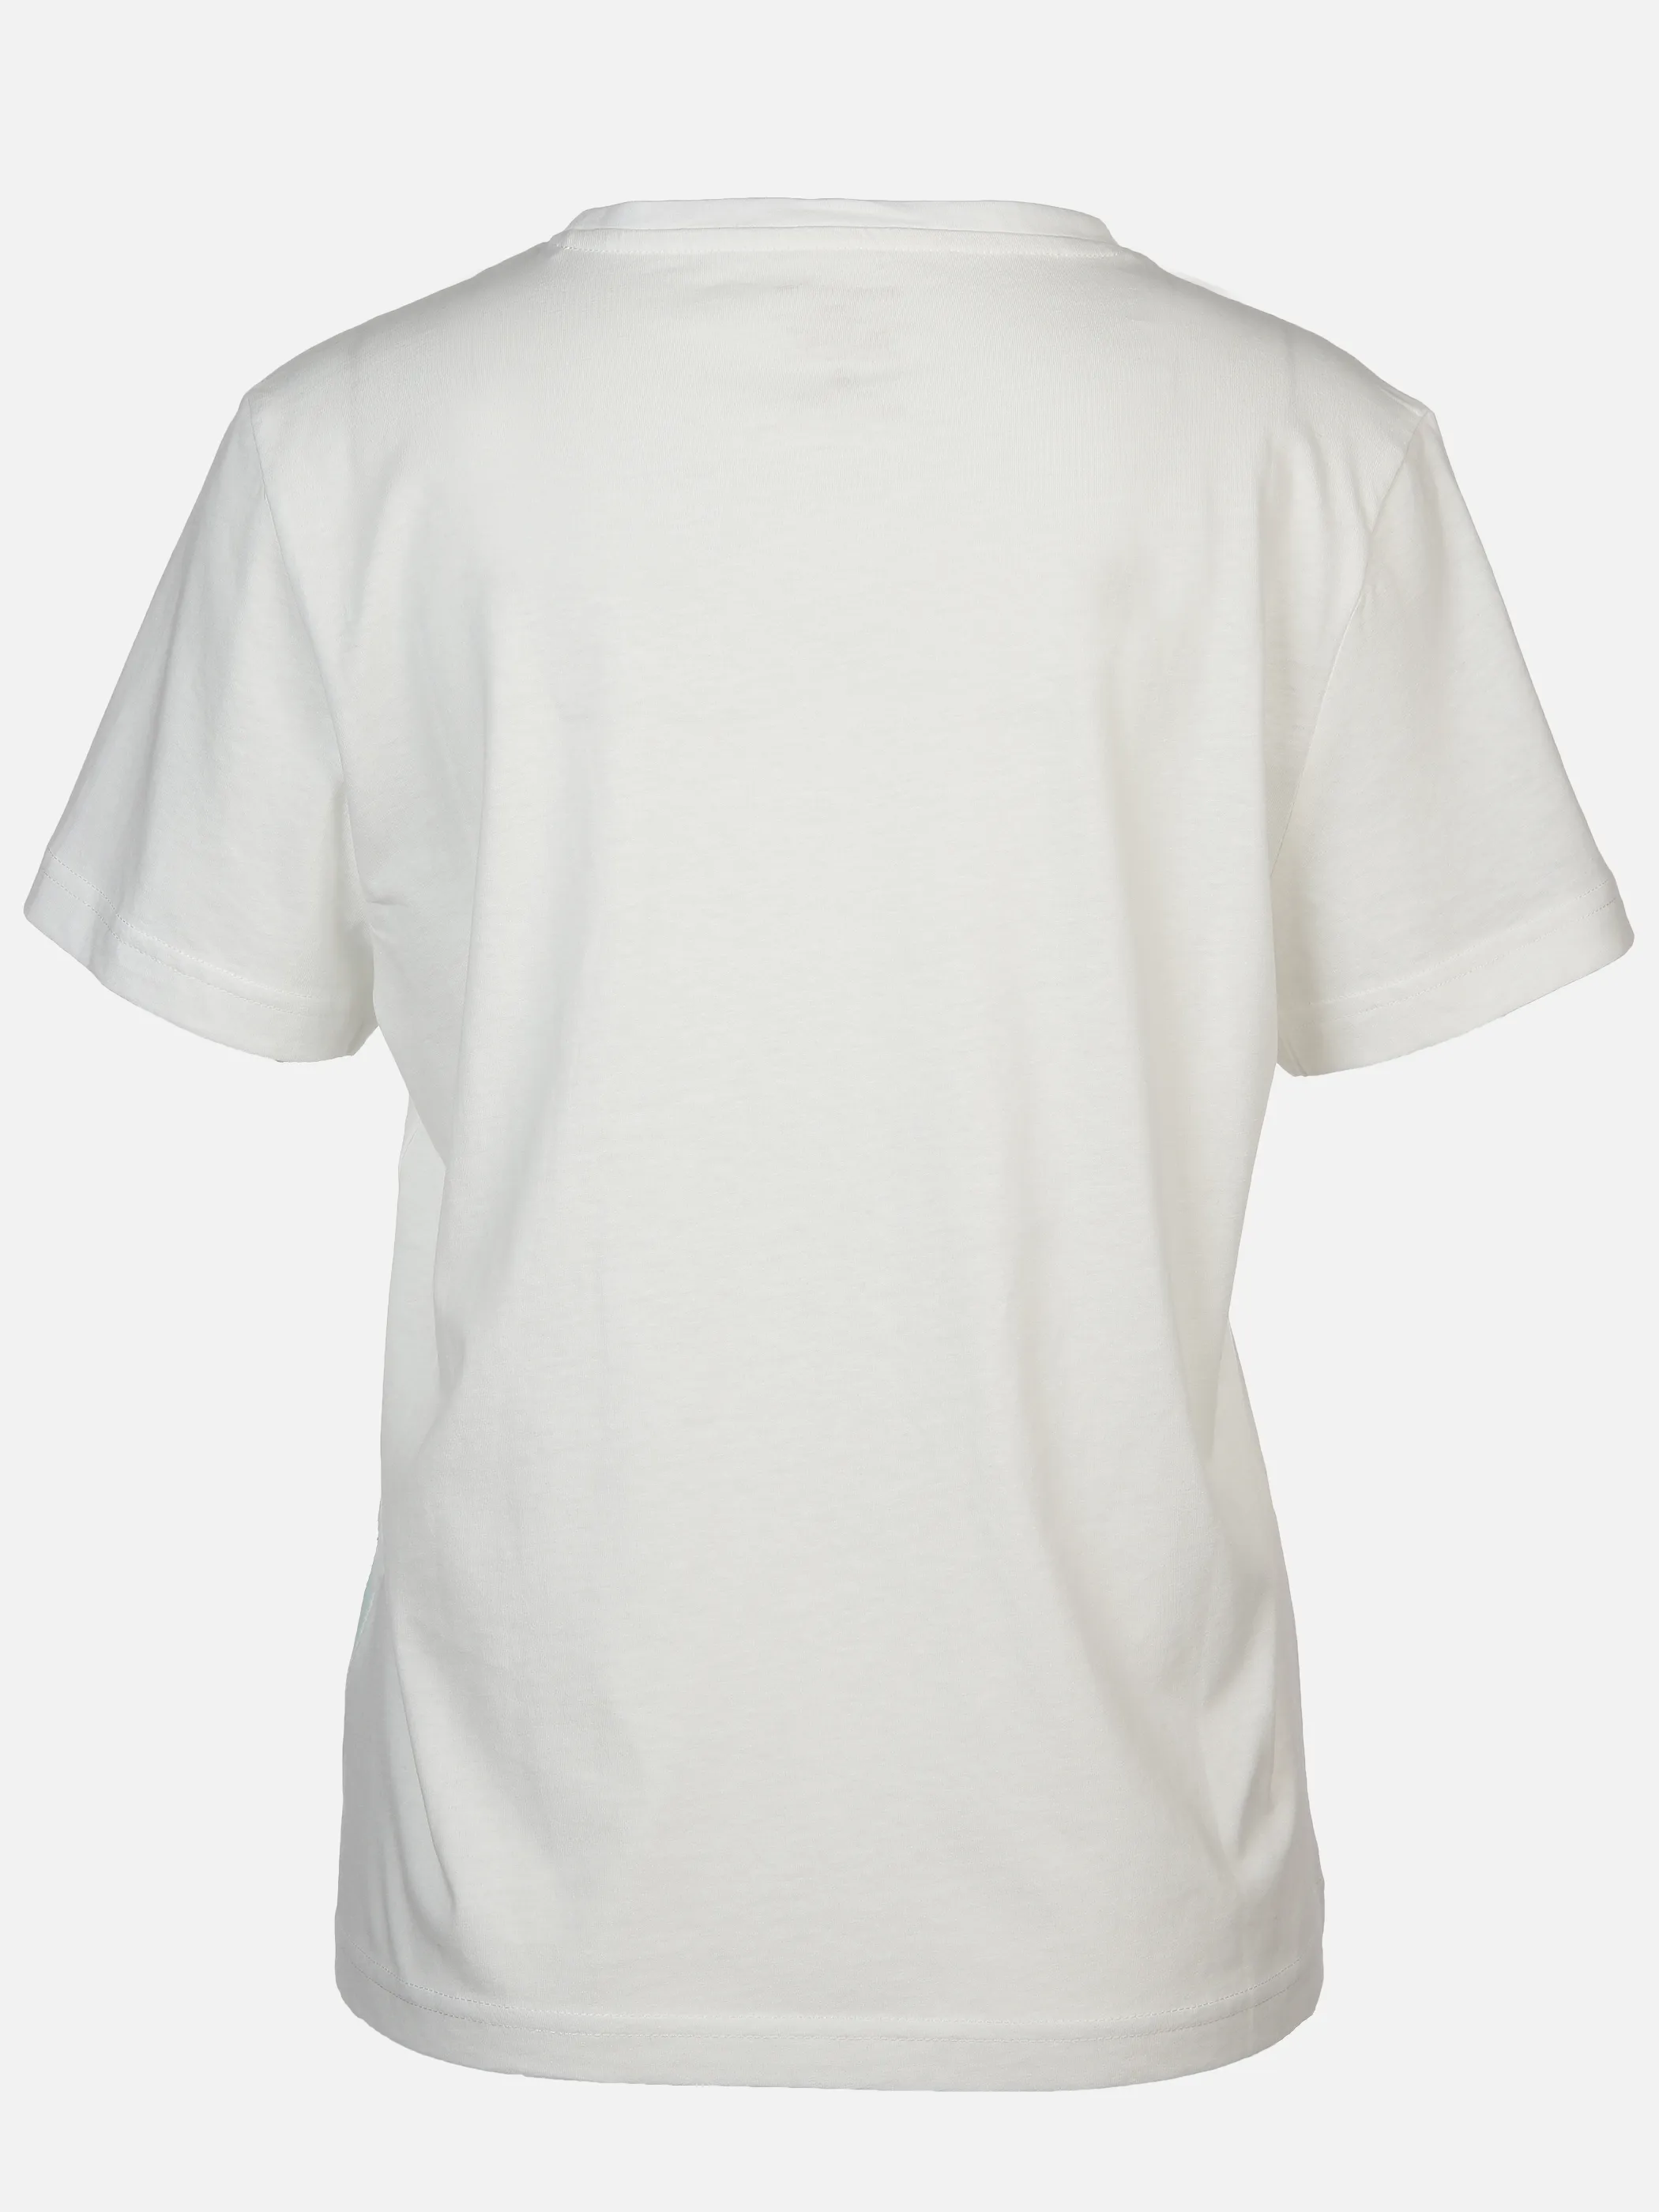 Tom Tailor 1040544 NOS T-shirt crew neck print Weiß 890588 10332 2